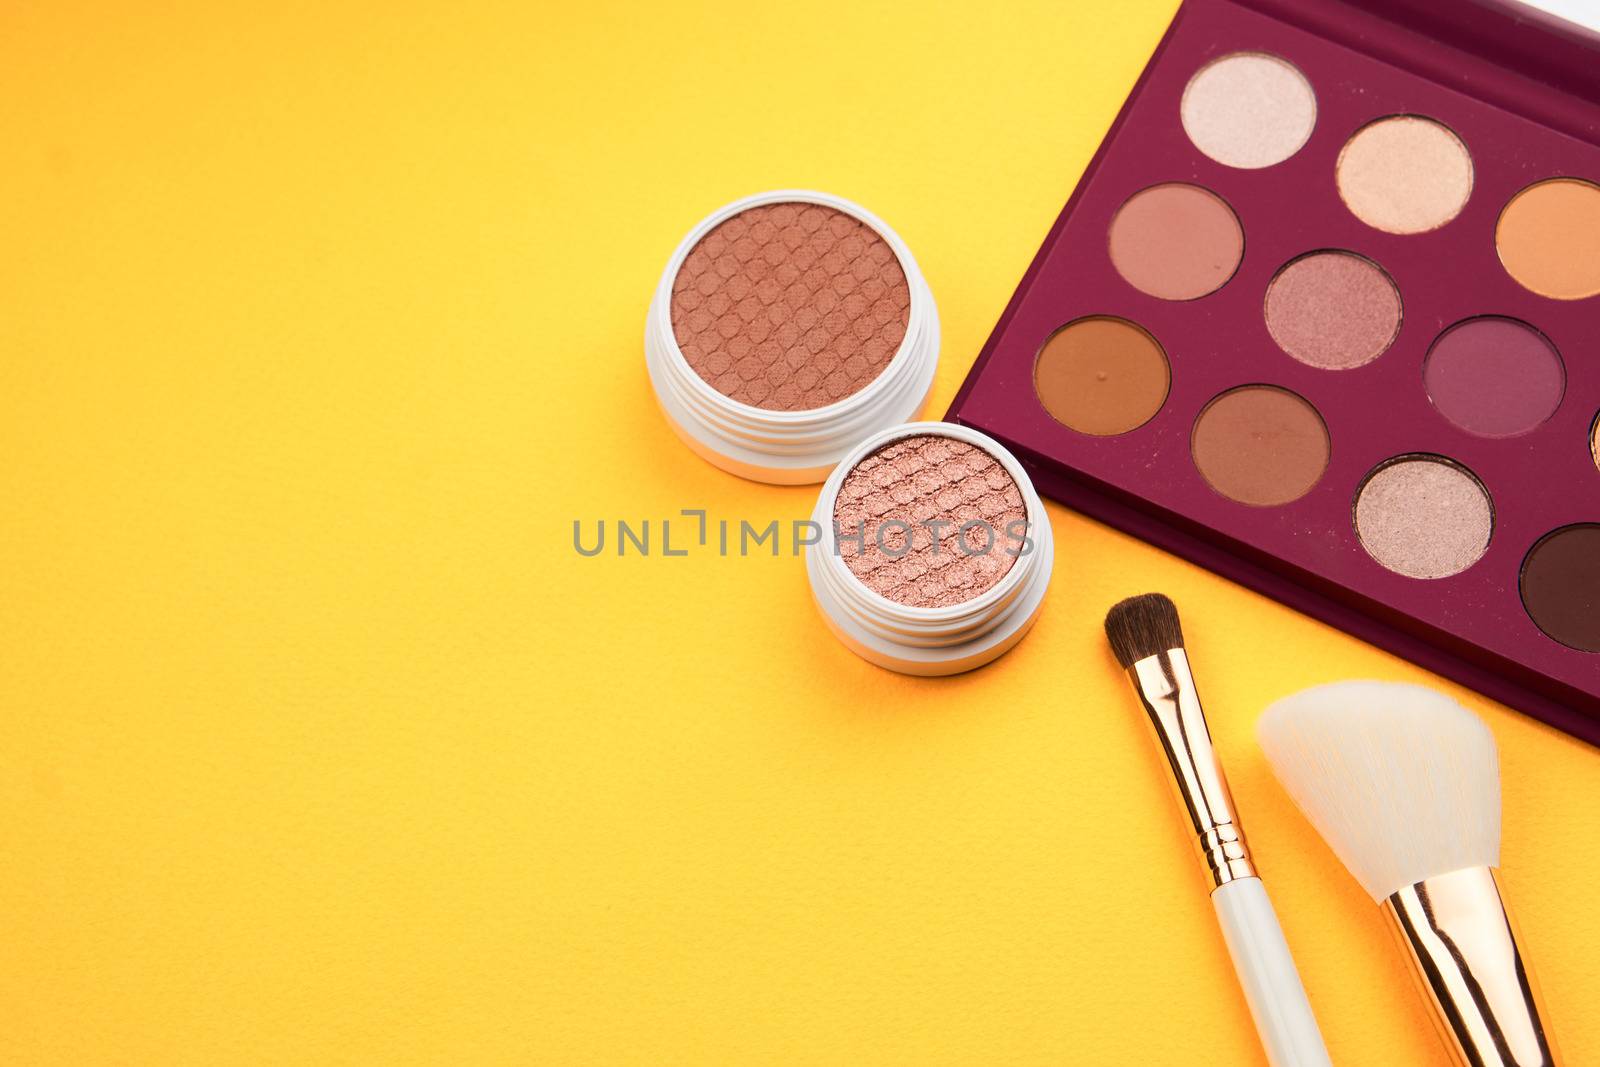 eyeshadow powder blush makeup brushes yellow background Copy space by SHOTPRIME